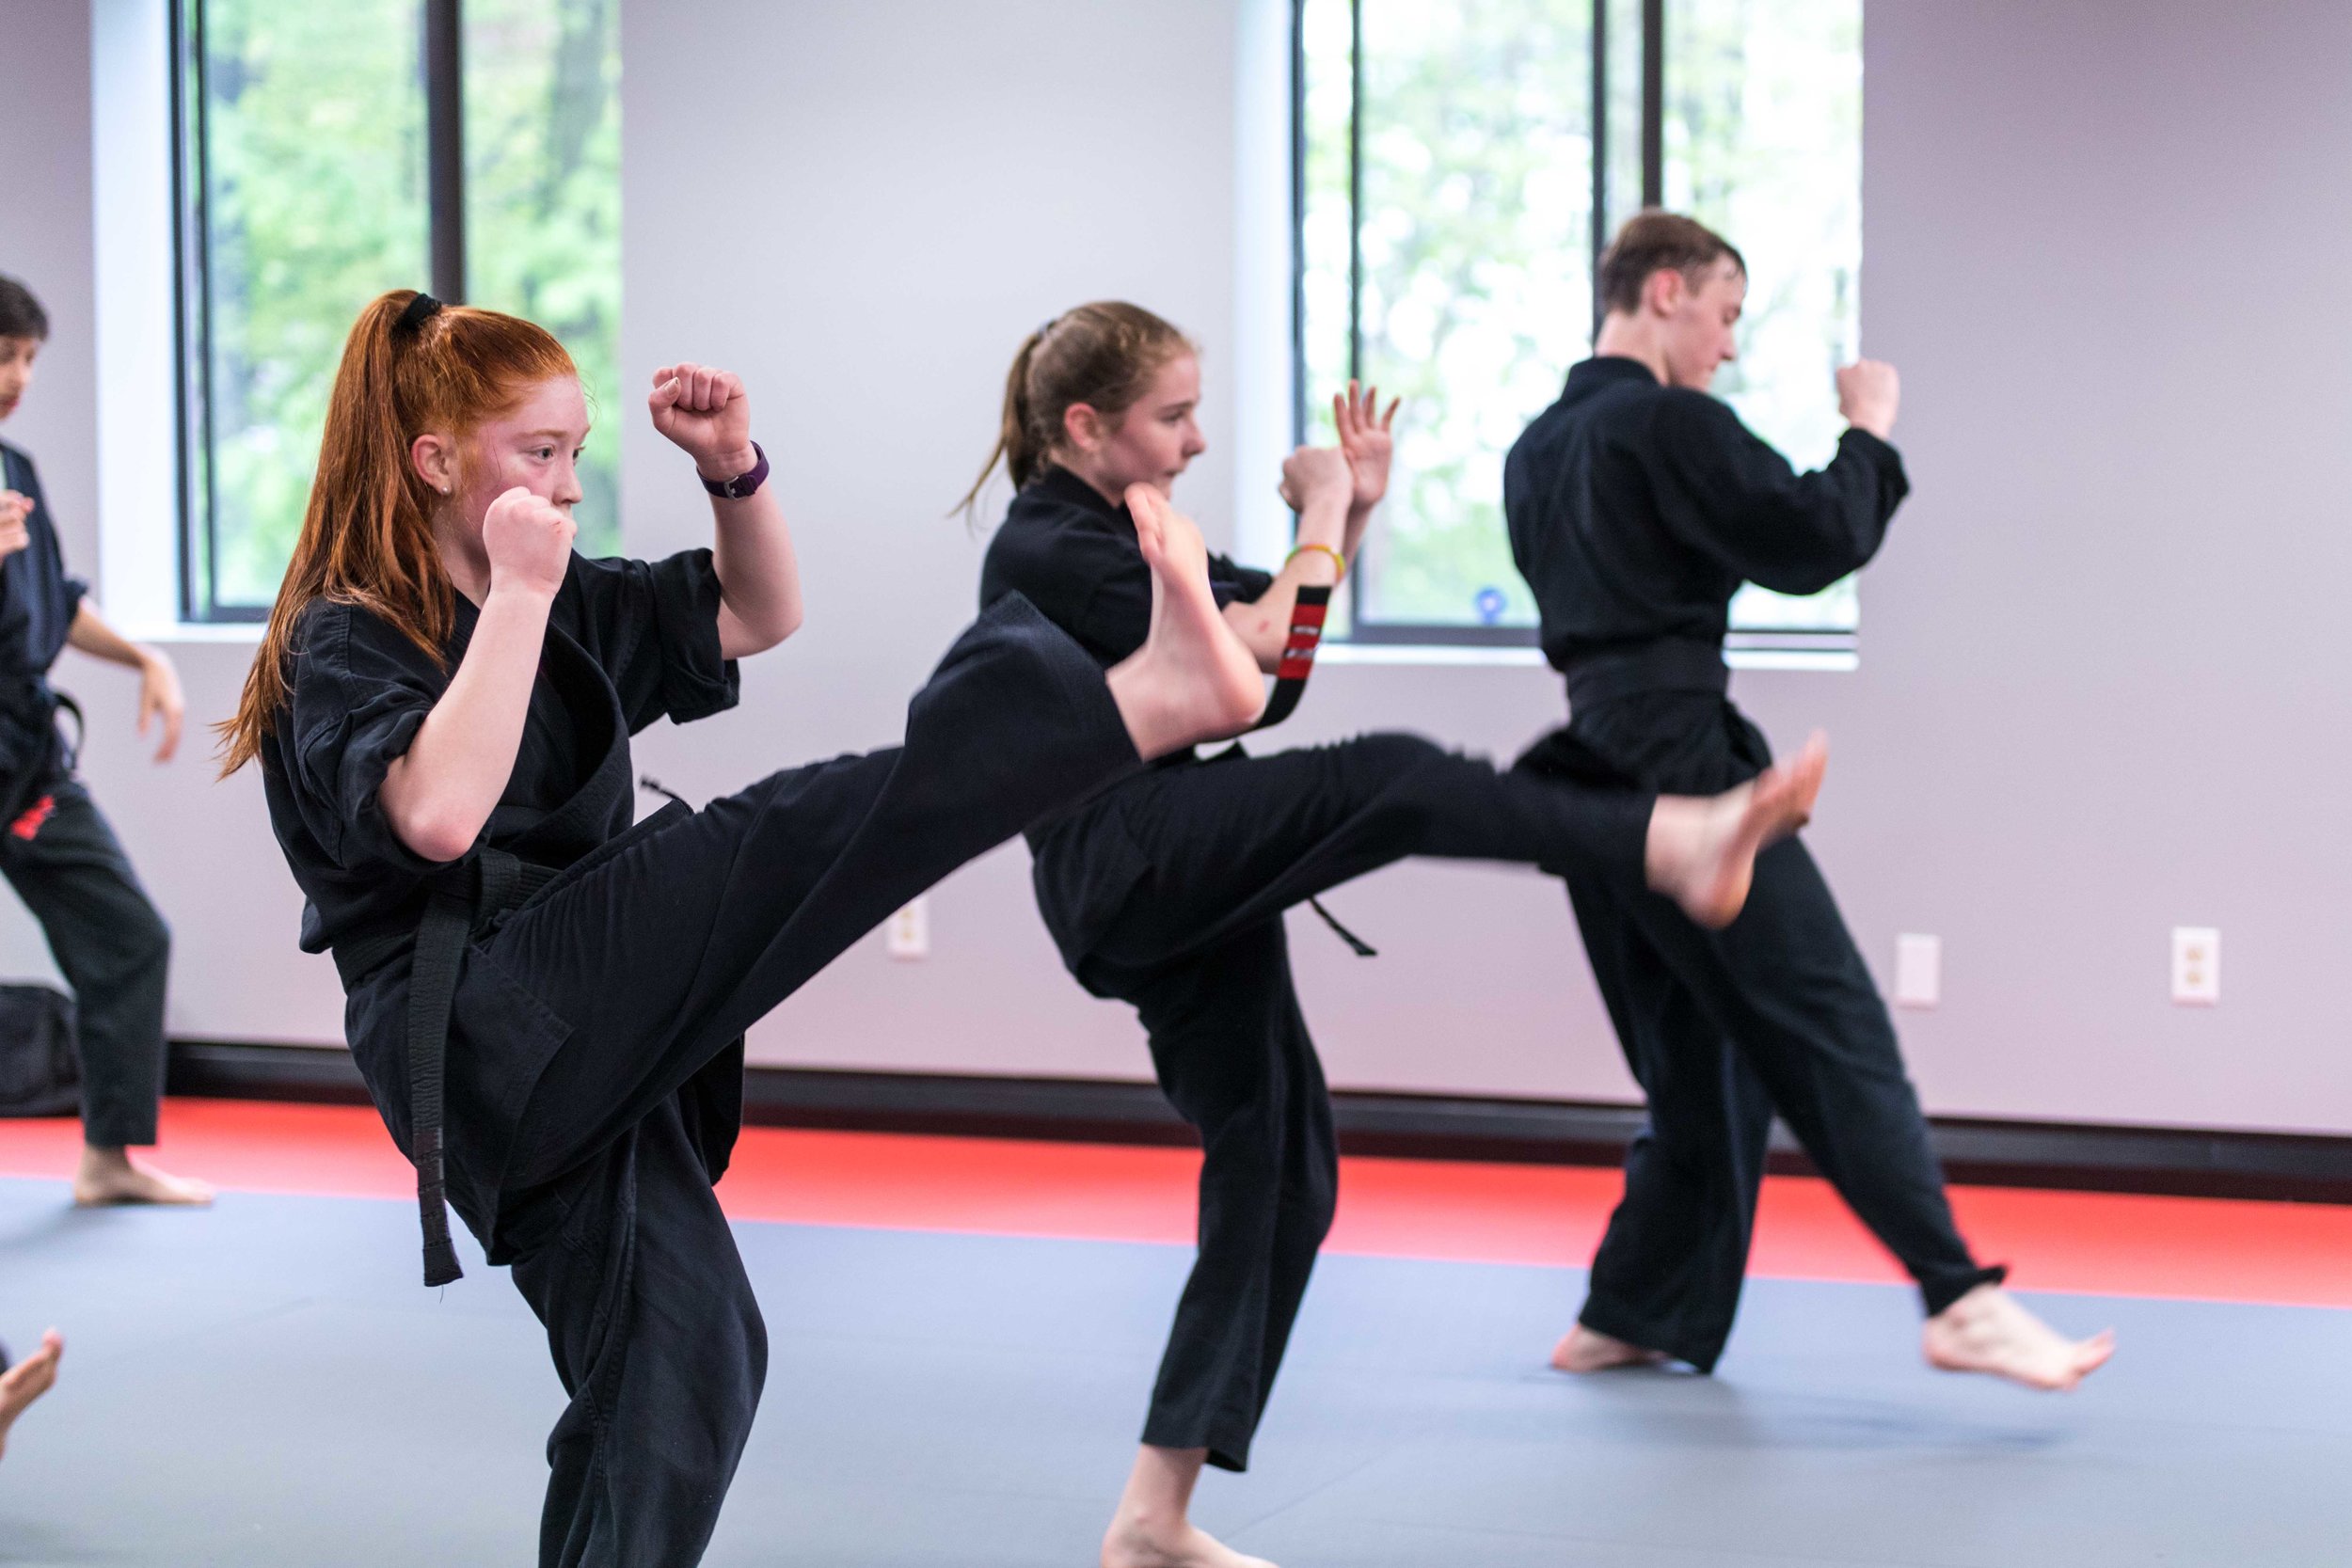 Karate Classes for Teenage Girls and Boys in Bedford Massachusetts at Callahan's Karate 1.jpg